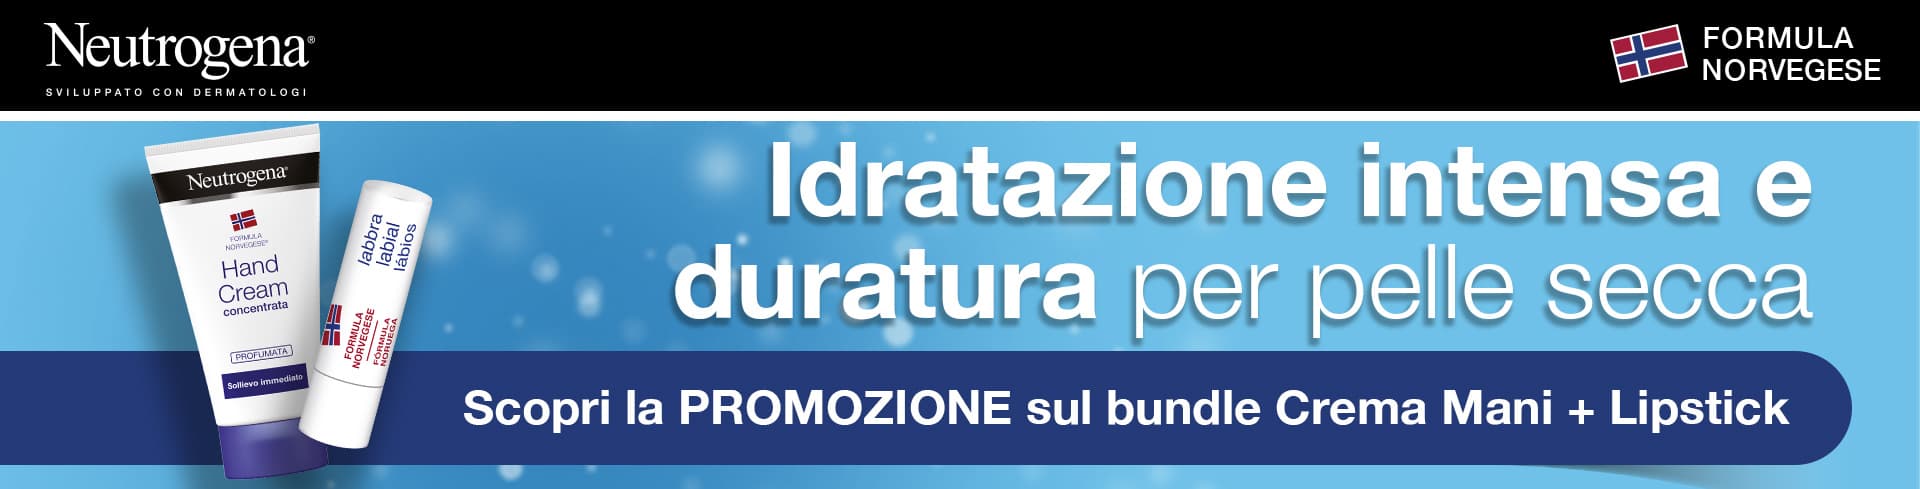 banner promozionale Neutrogena Bundle Crema Mani + Lipstick desktop